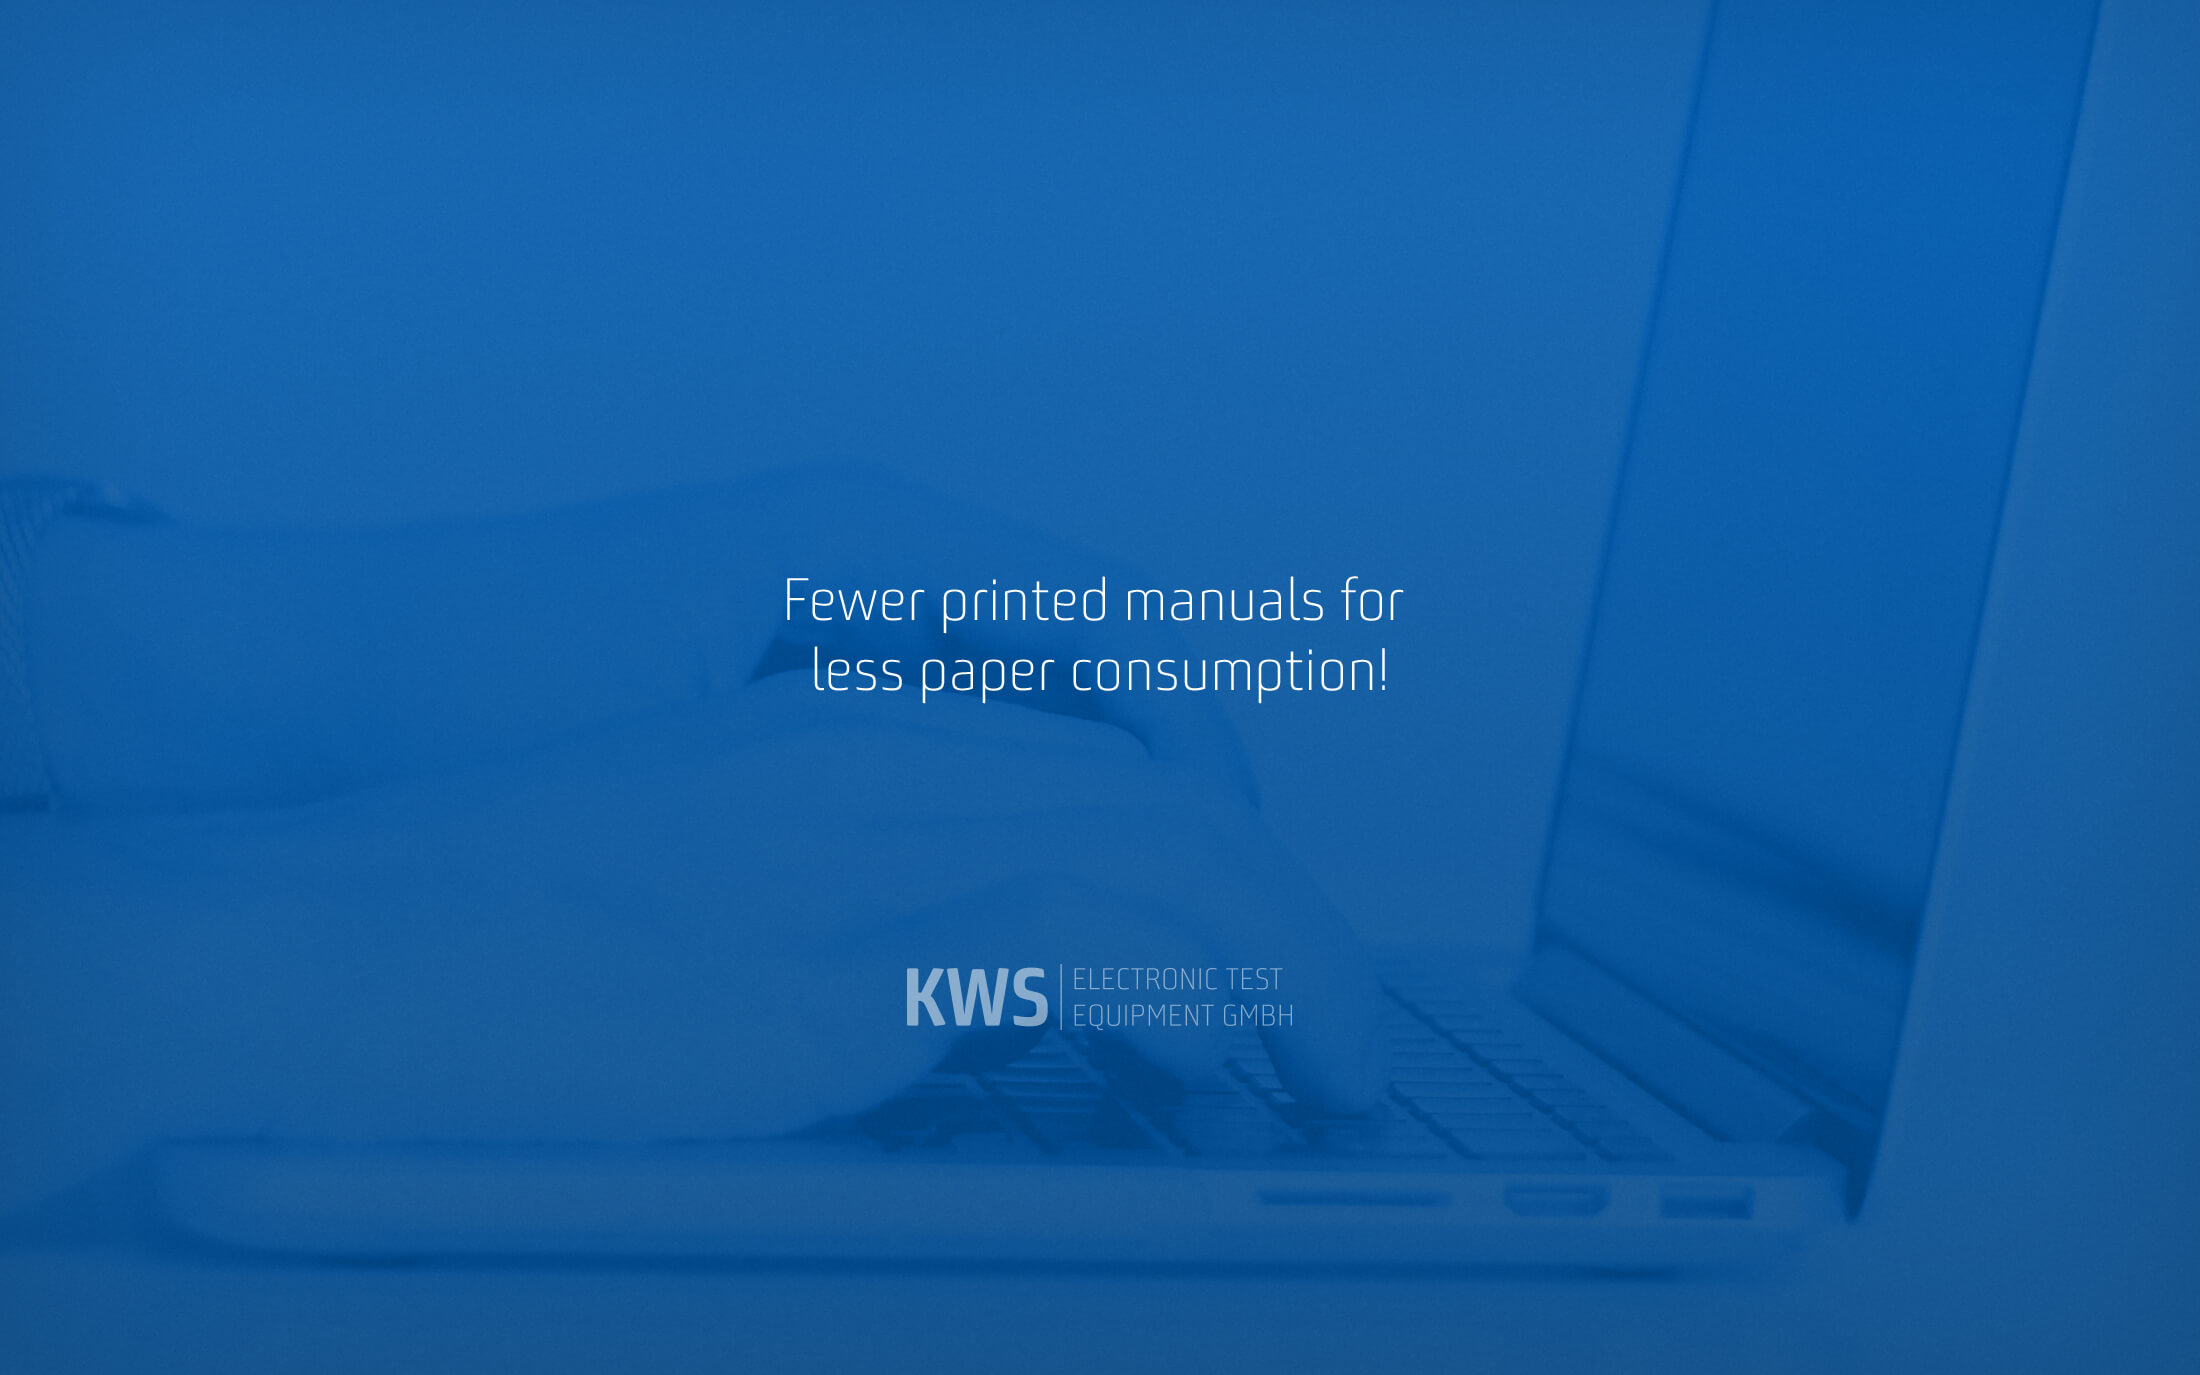 KWS-Electronic News 2019: Fewer printed manuals